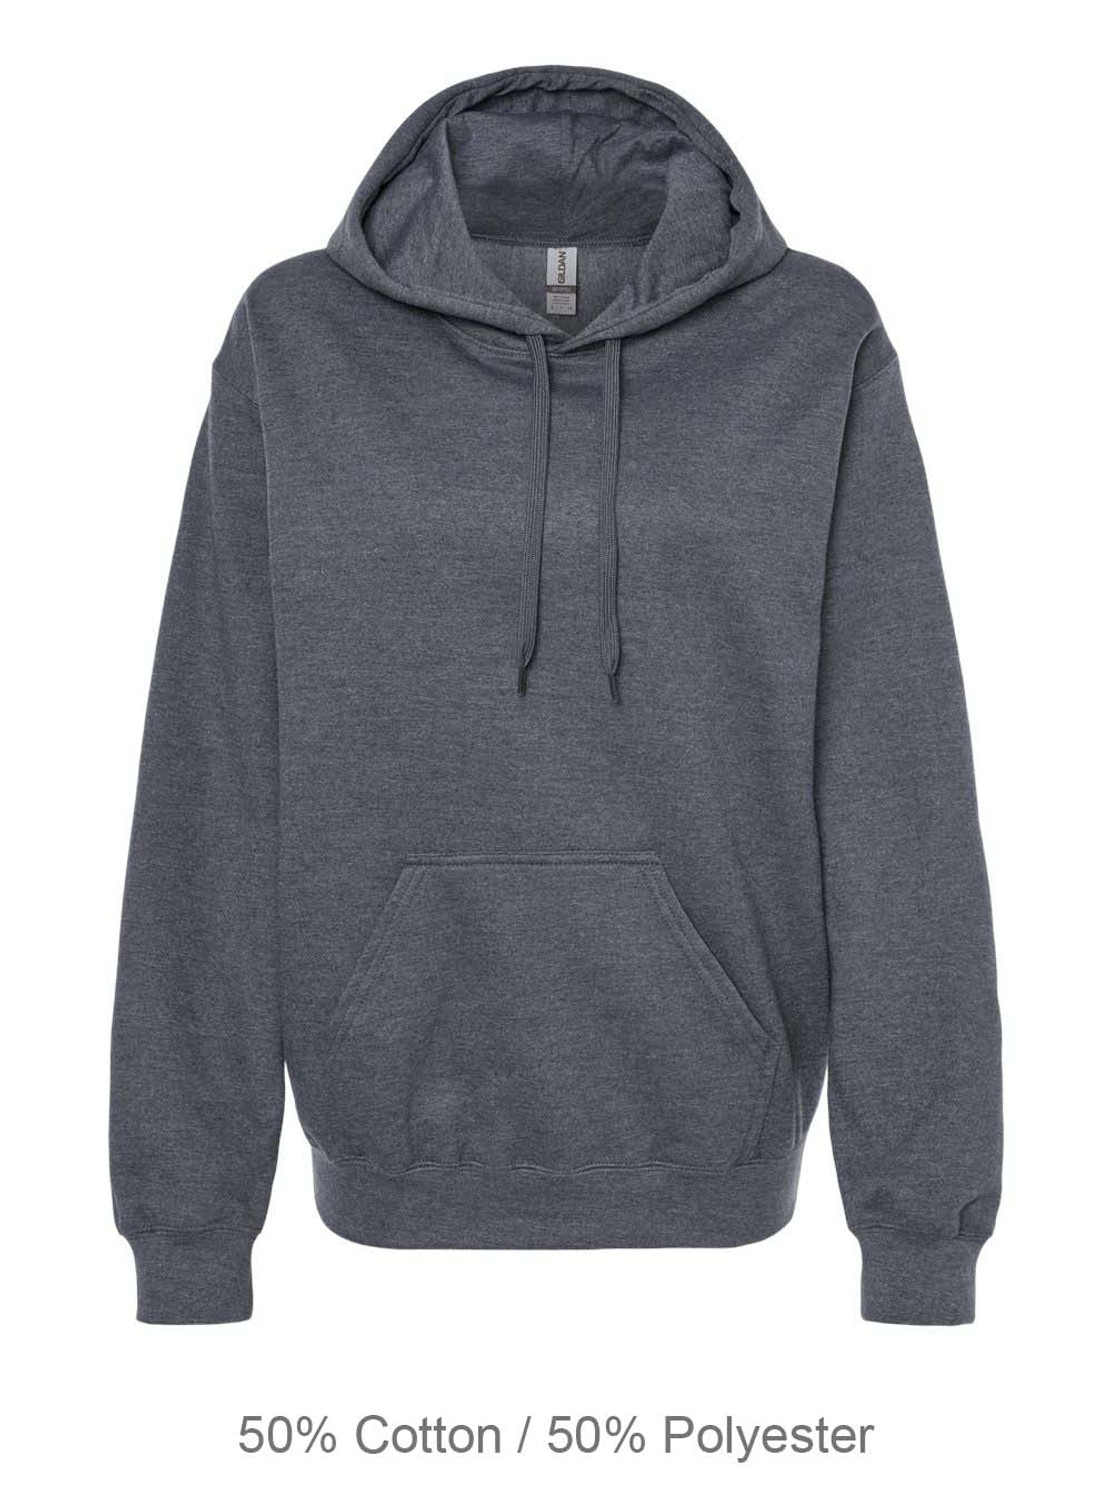 Gildan SF500 - Softstyle Hooded Sweatshirt $13.32 - Sweatshirts